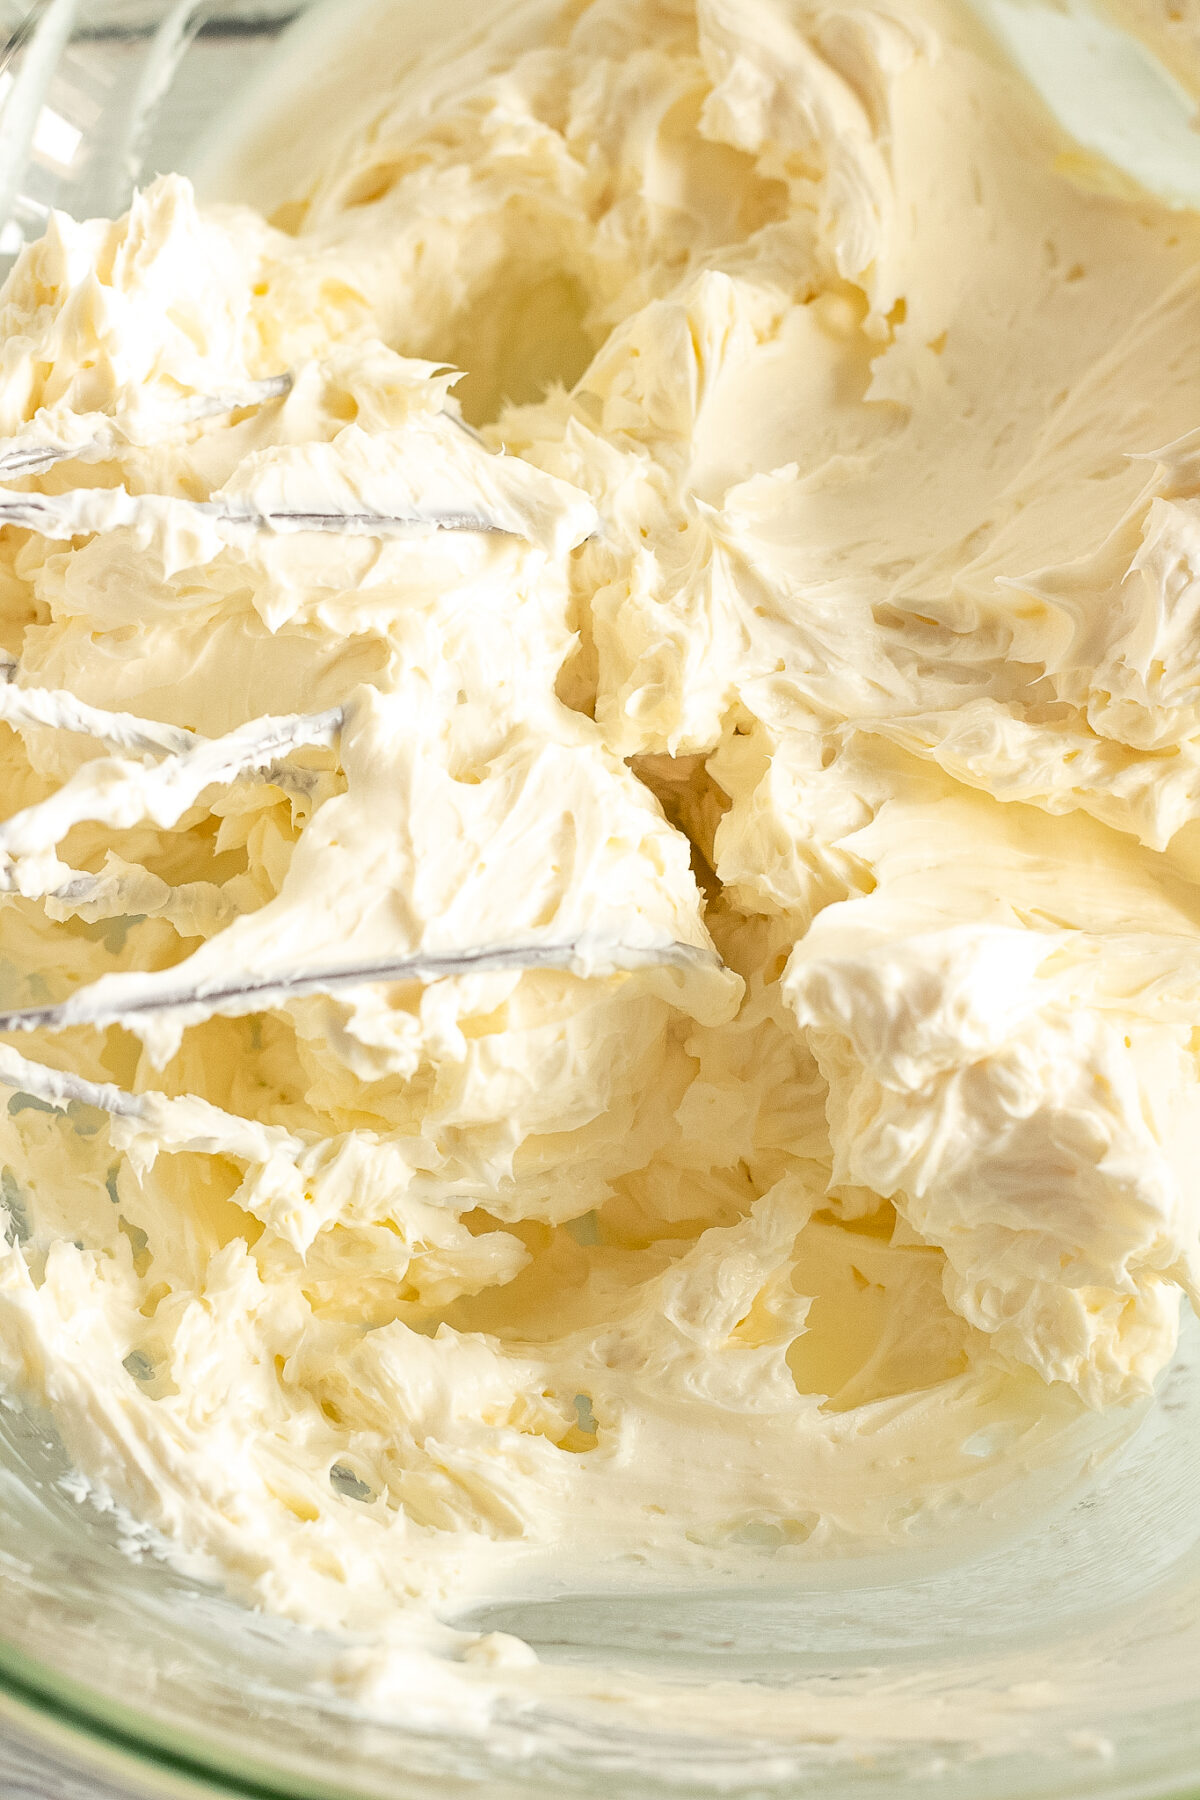 Cream cheese beat until fluffy.